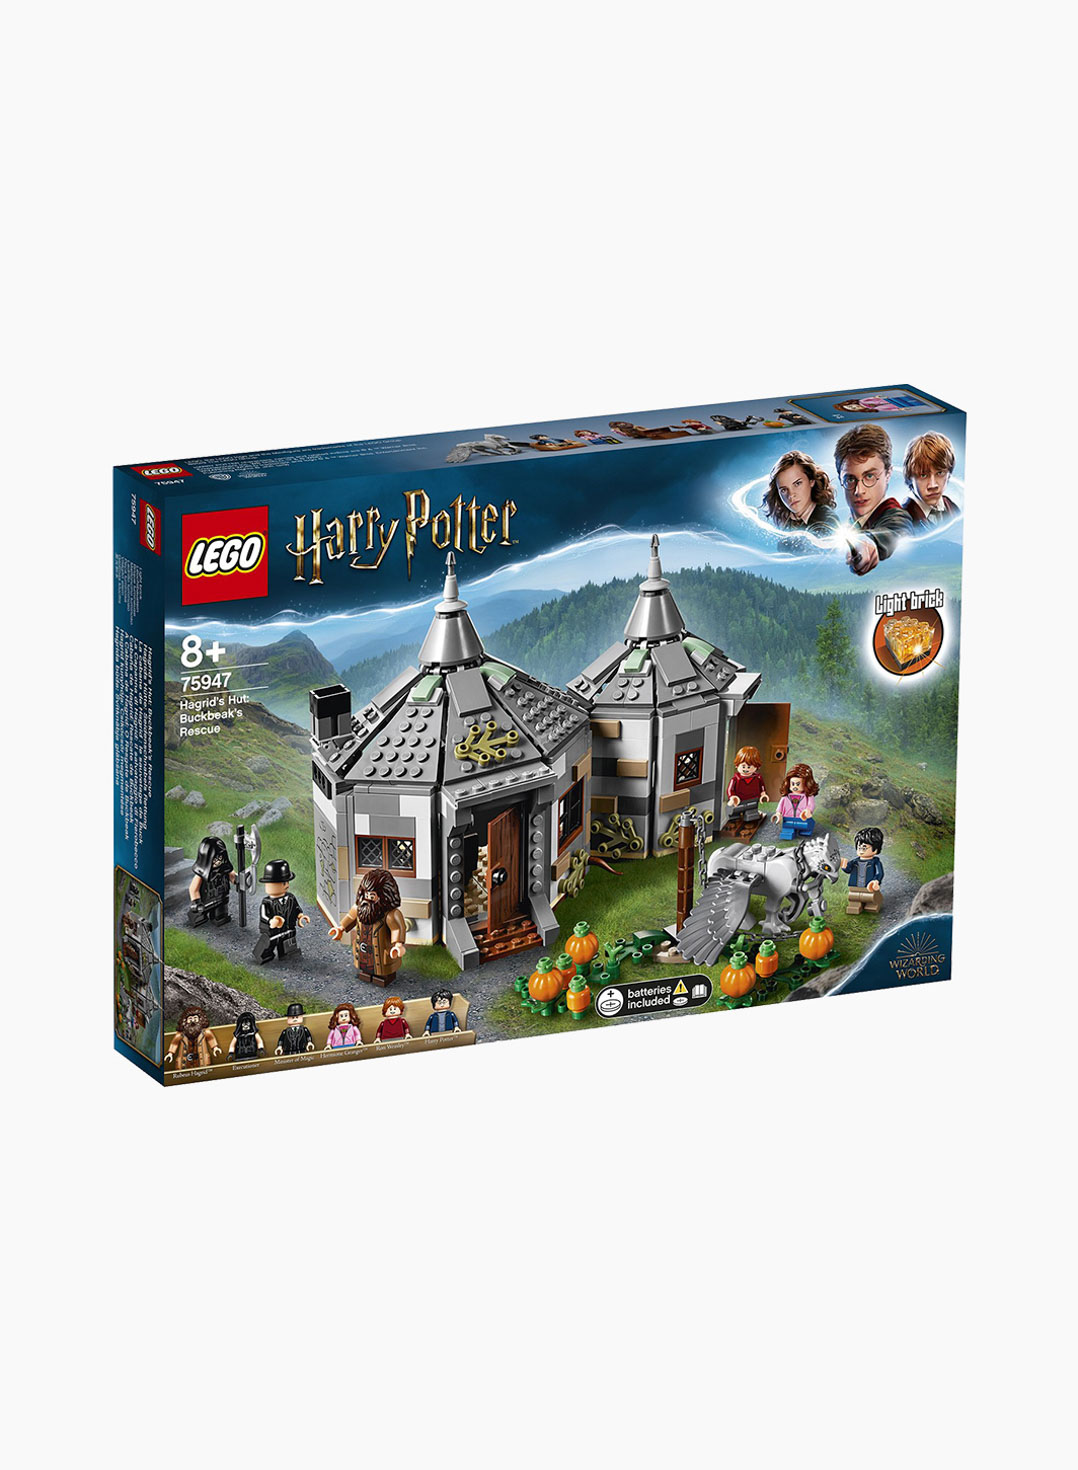 Lego Harry Potter Constructor Hagrids Hut: Buckbeaks Rescue